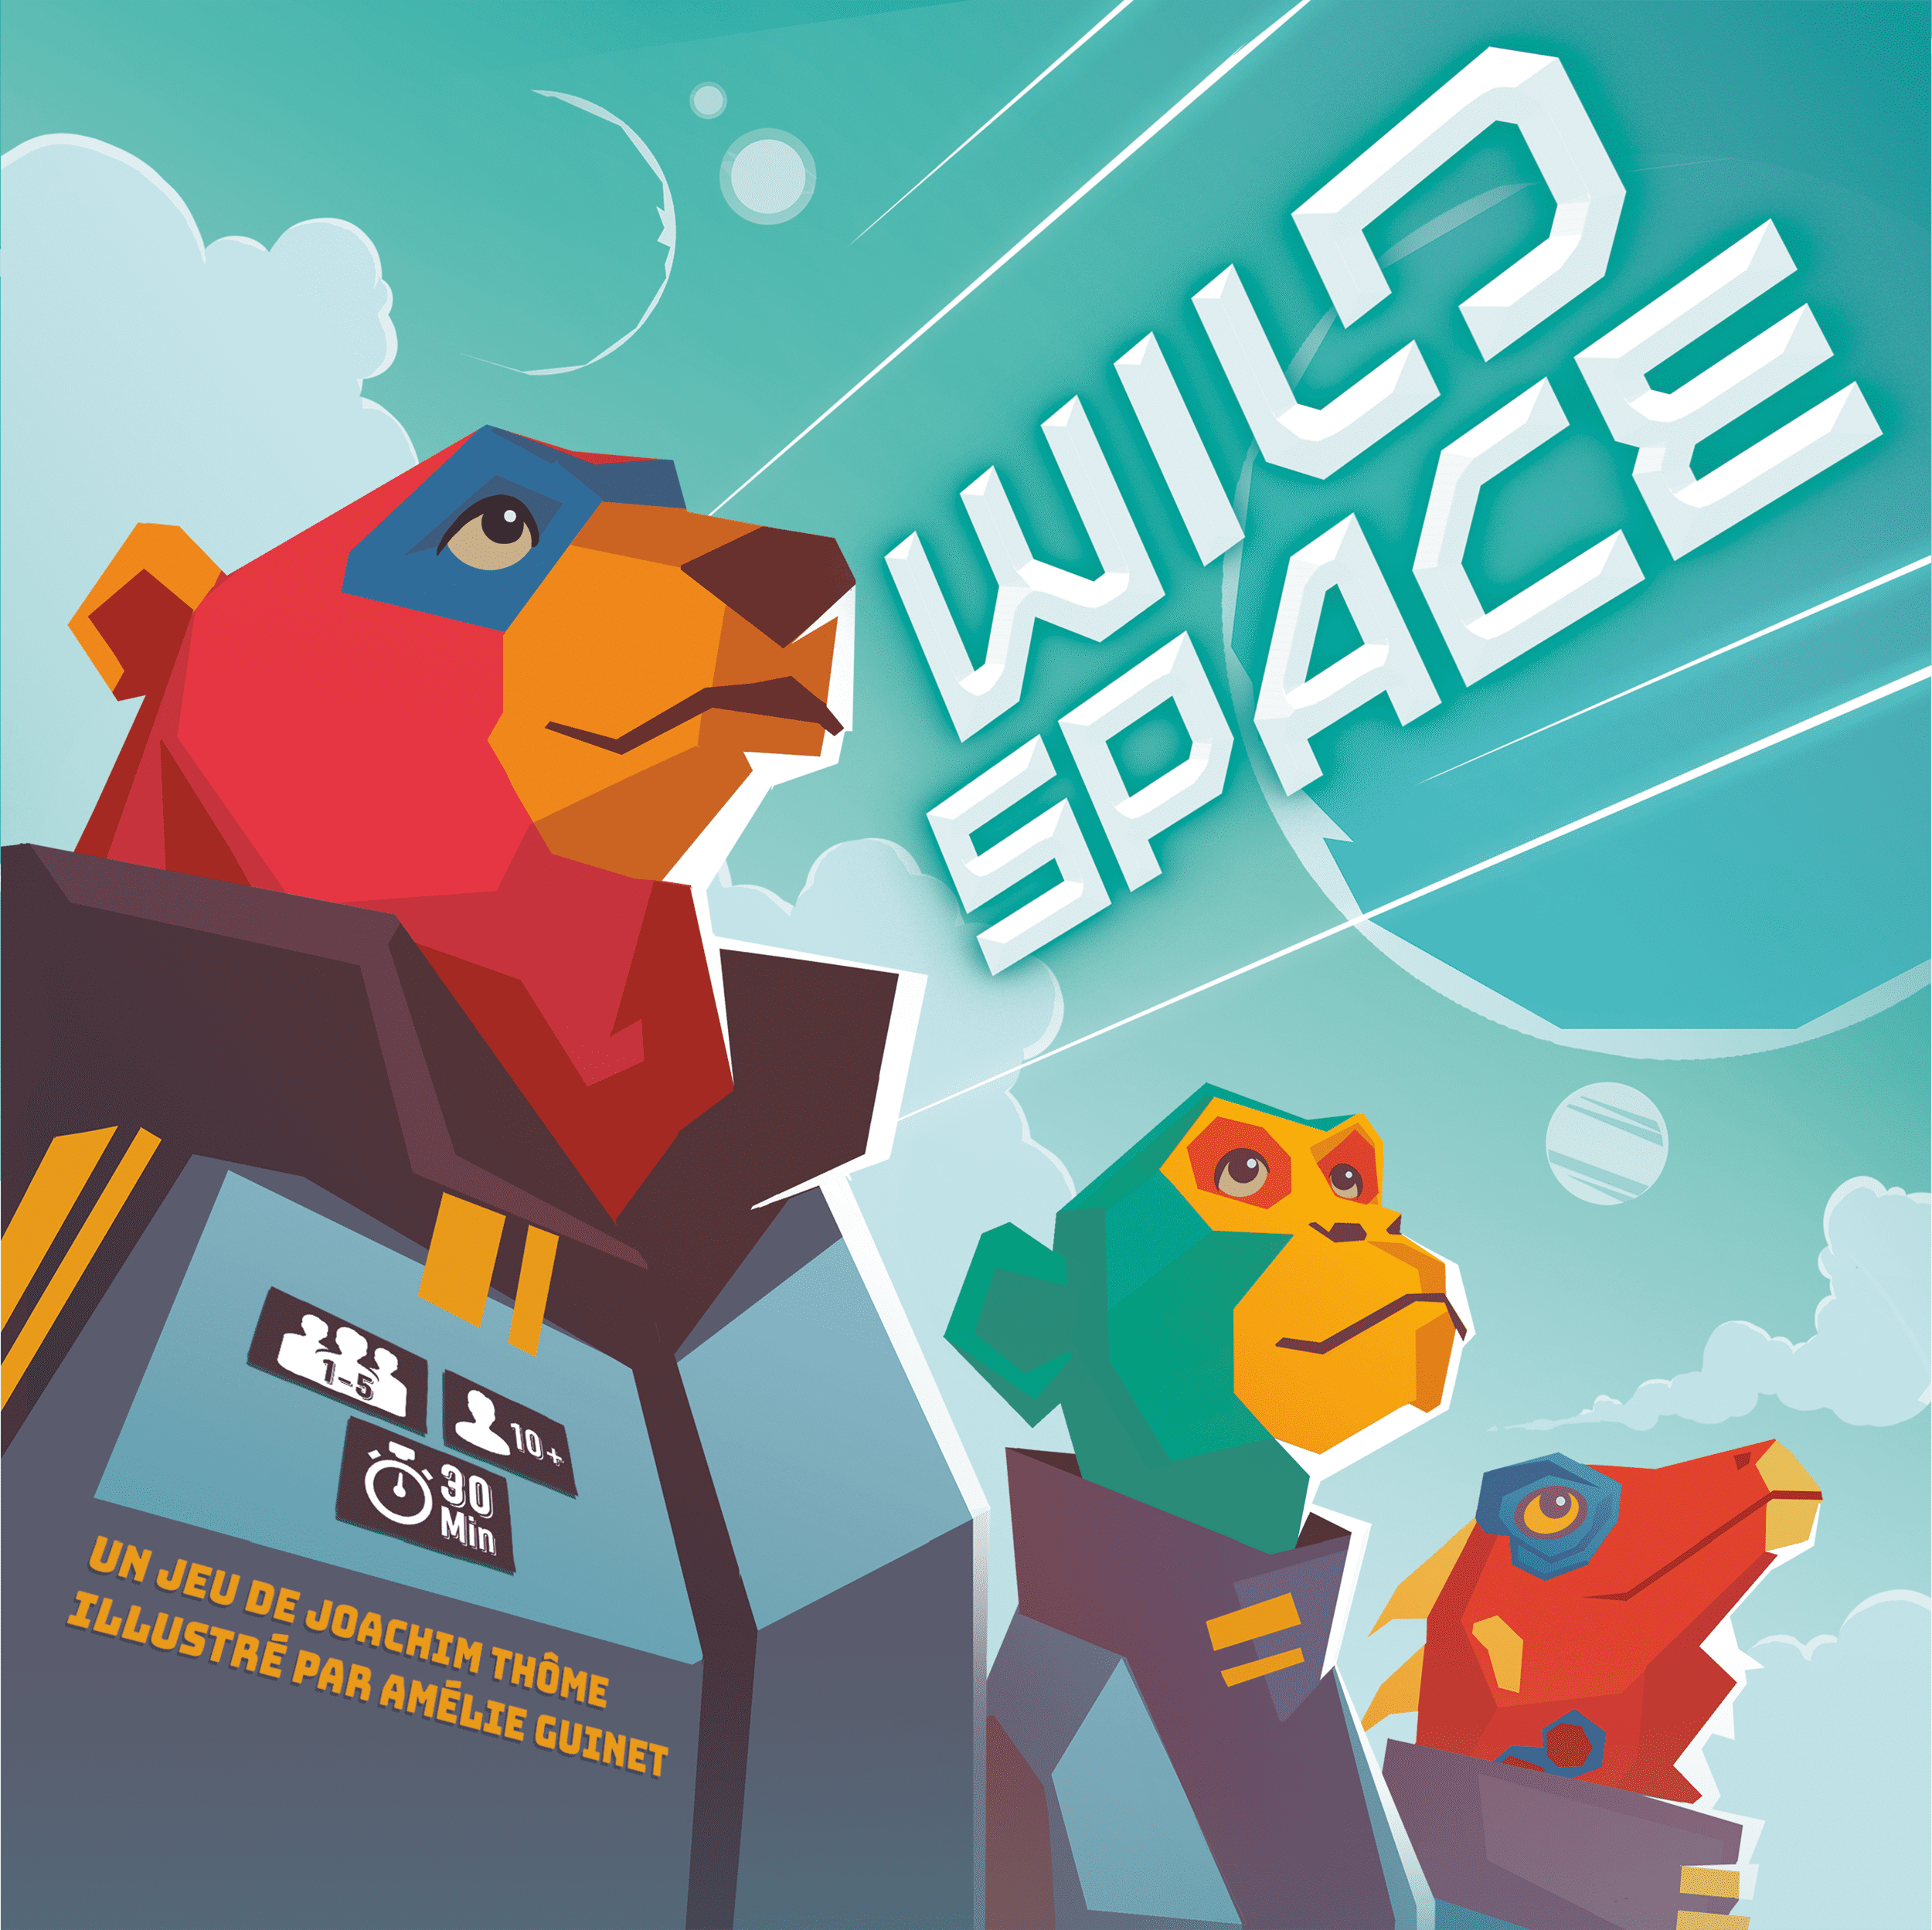 Wild Space